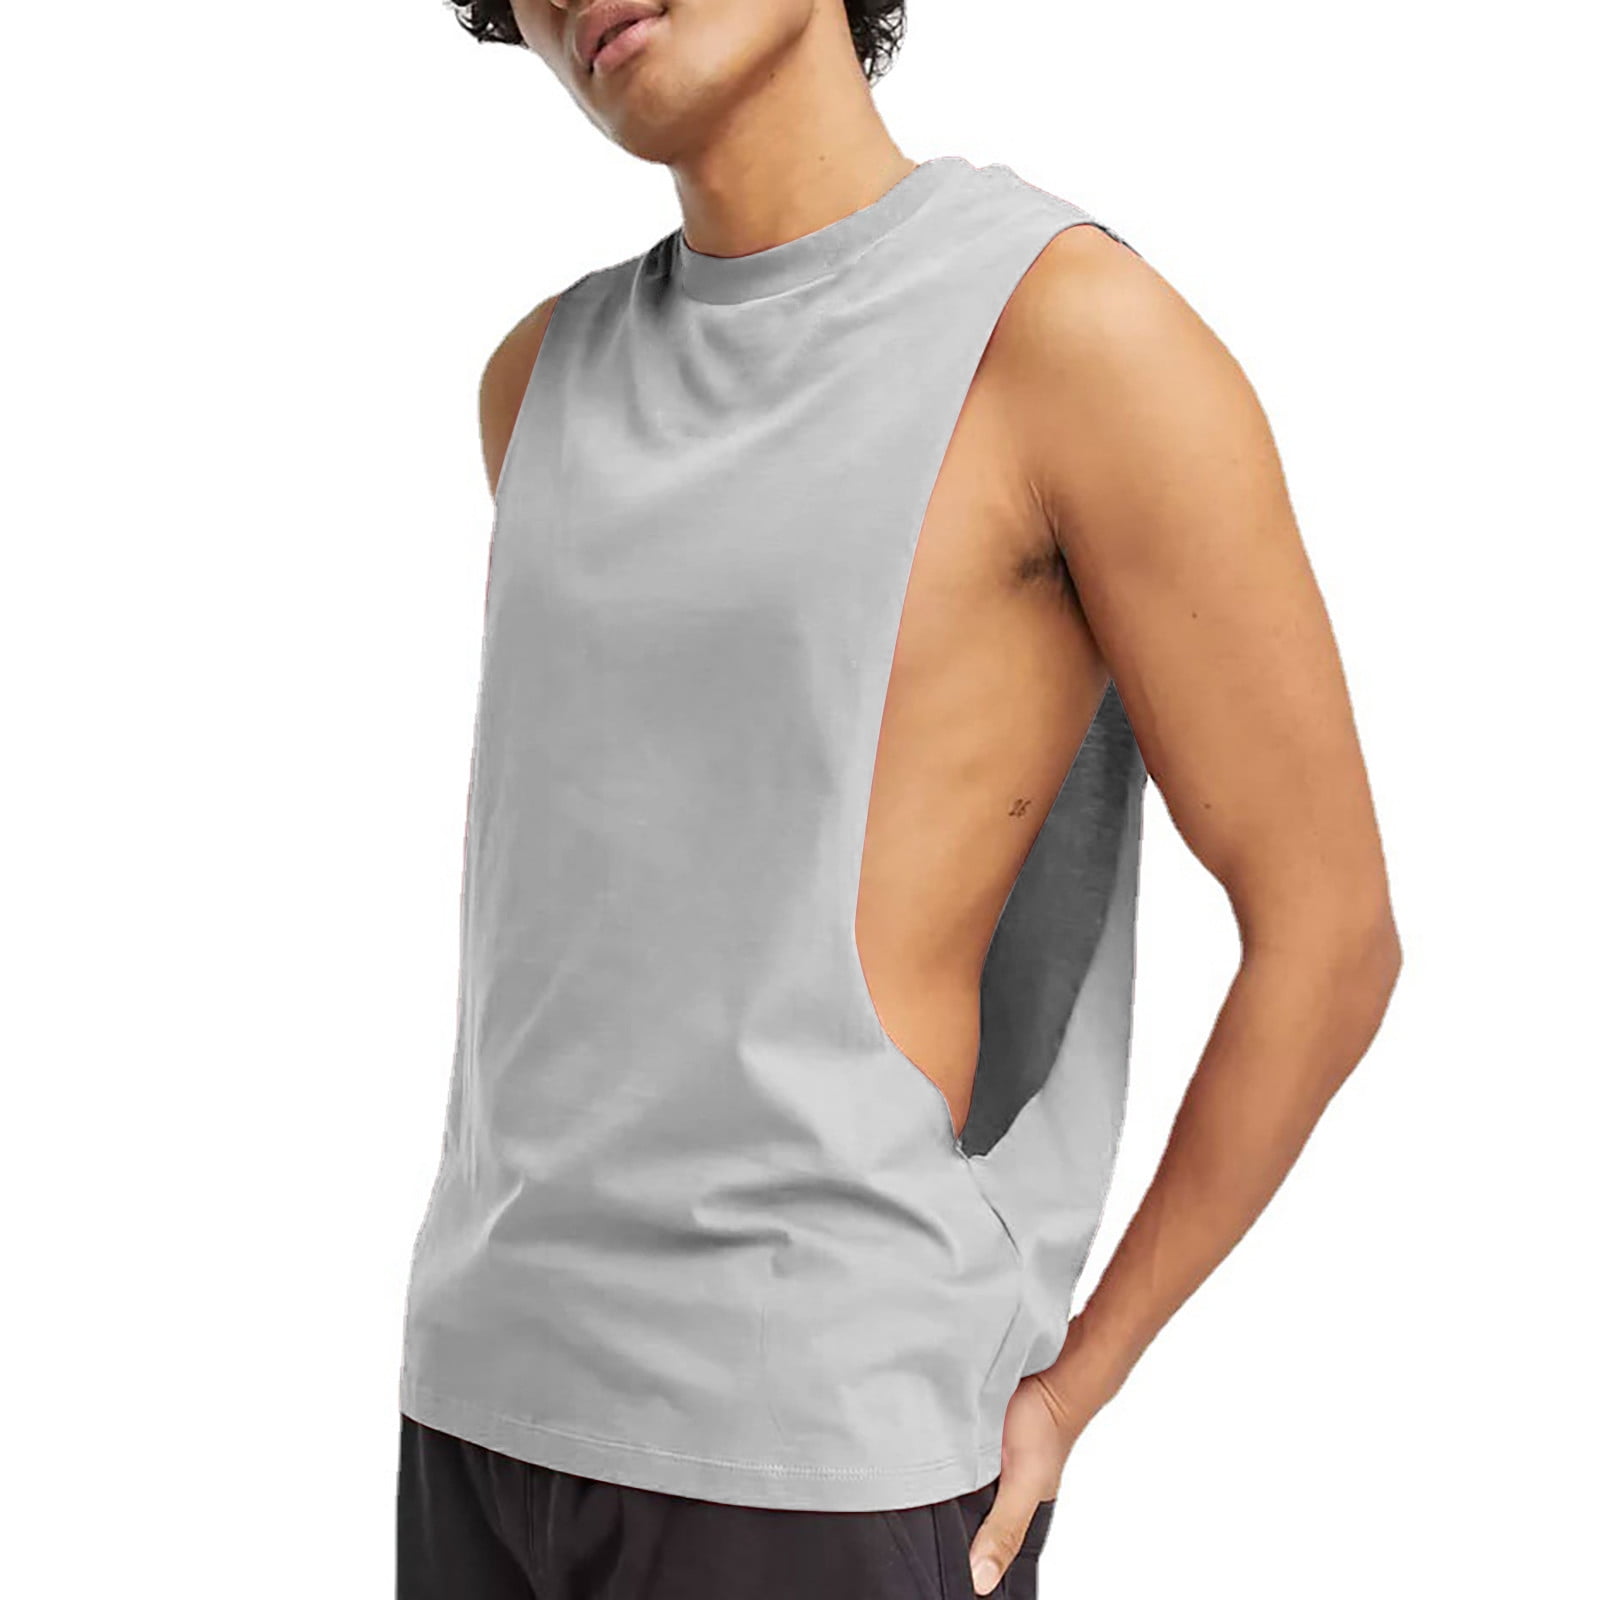 CBGELRT Men's Muscle T-Shirt Men Fashion Spring Summer Casual Sleeveless O  Neck Solid Tank Tops Blouse Sport Shirts Sleeveless Shirt M